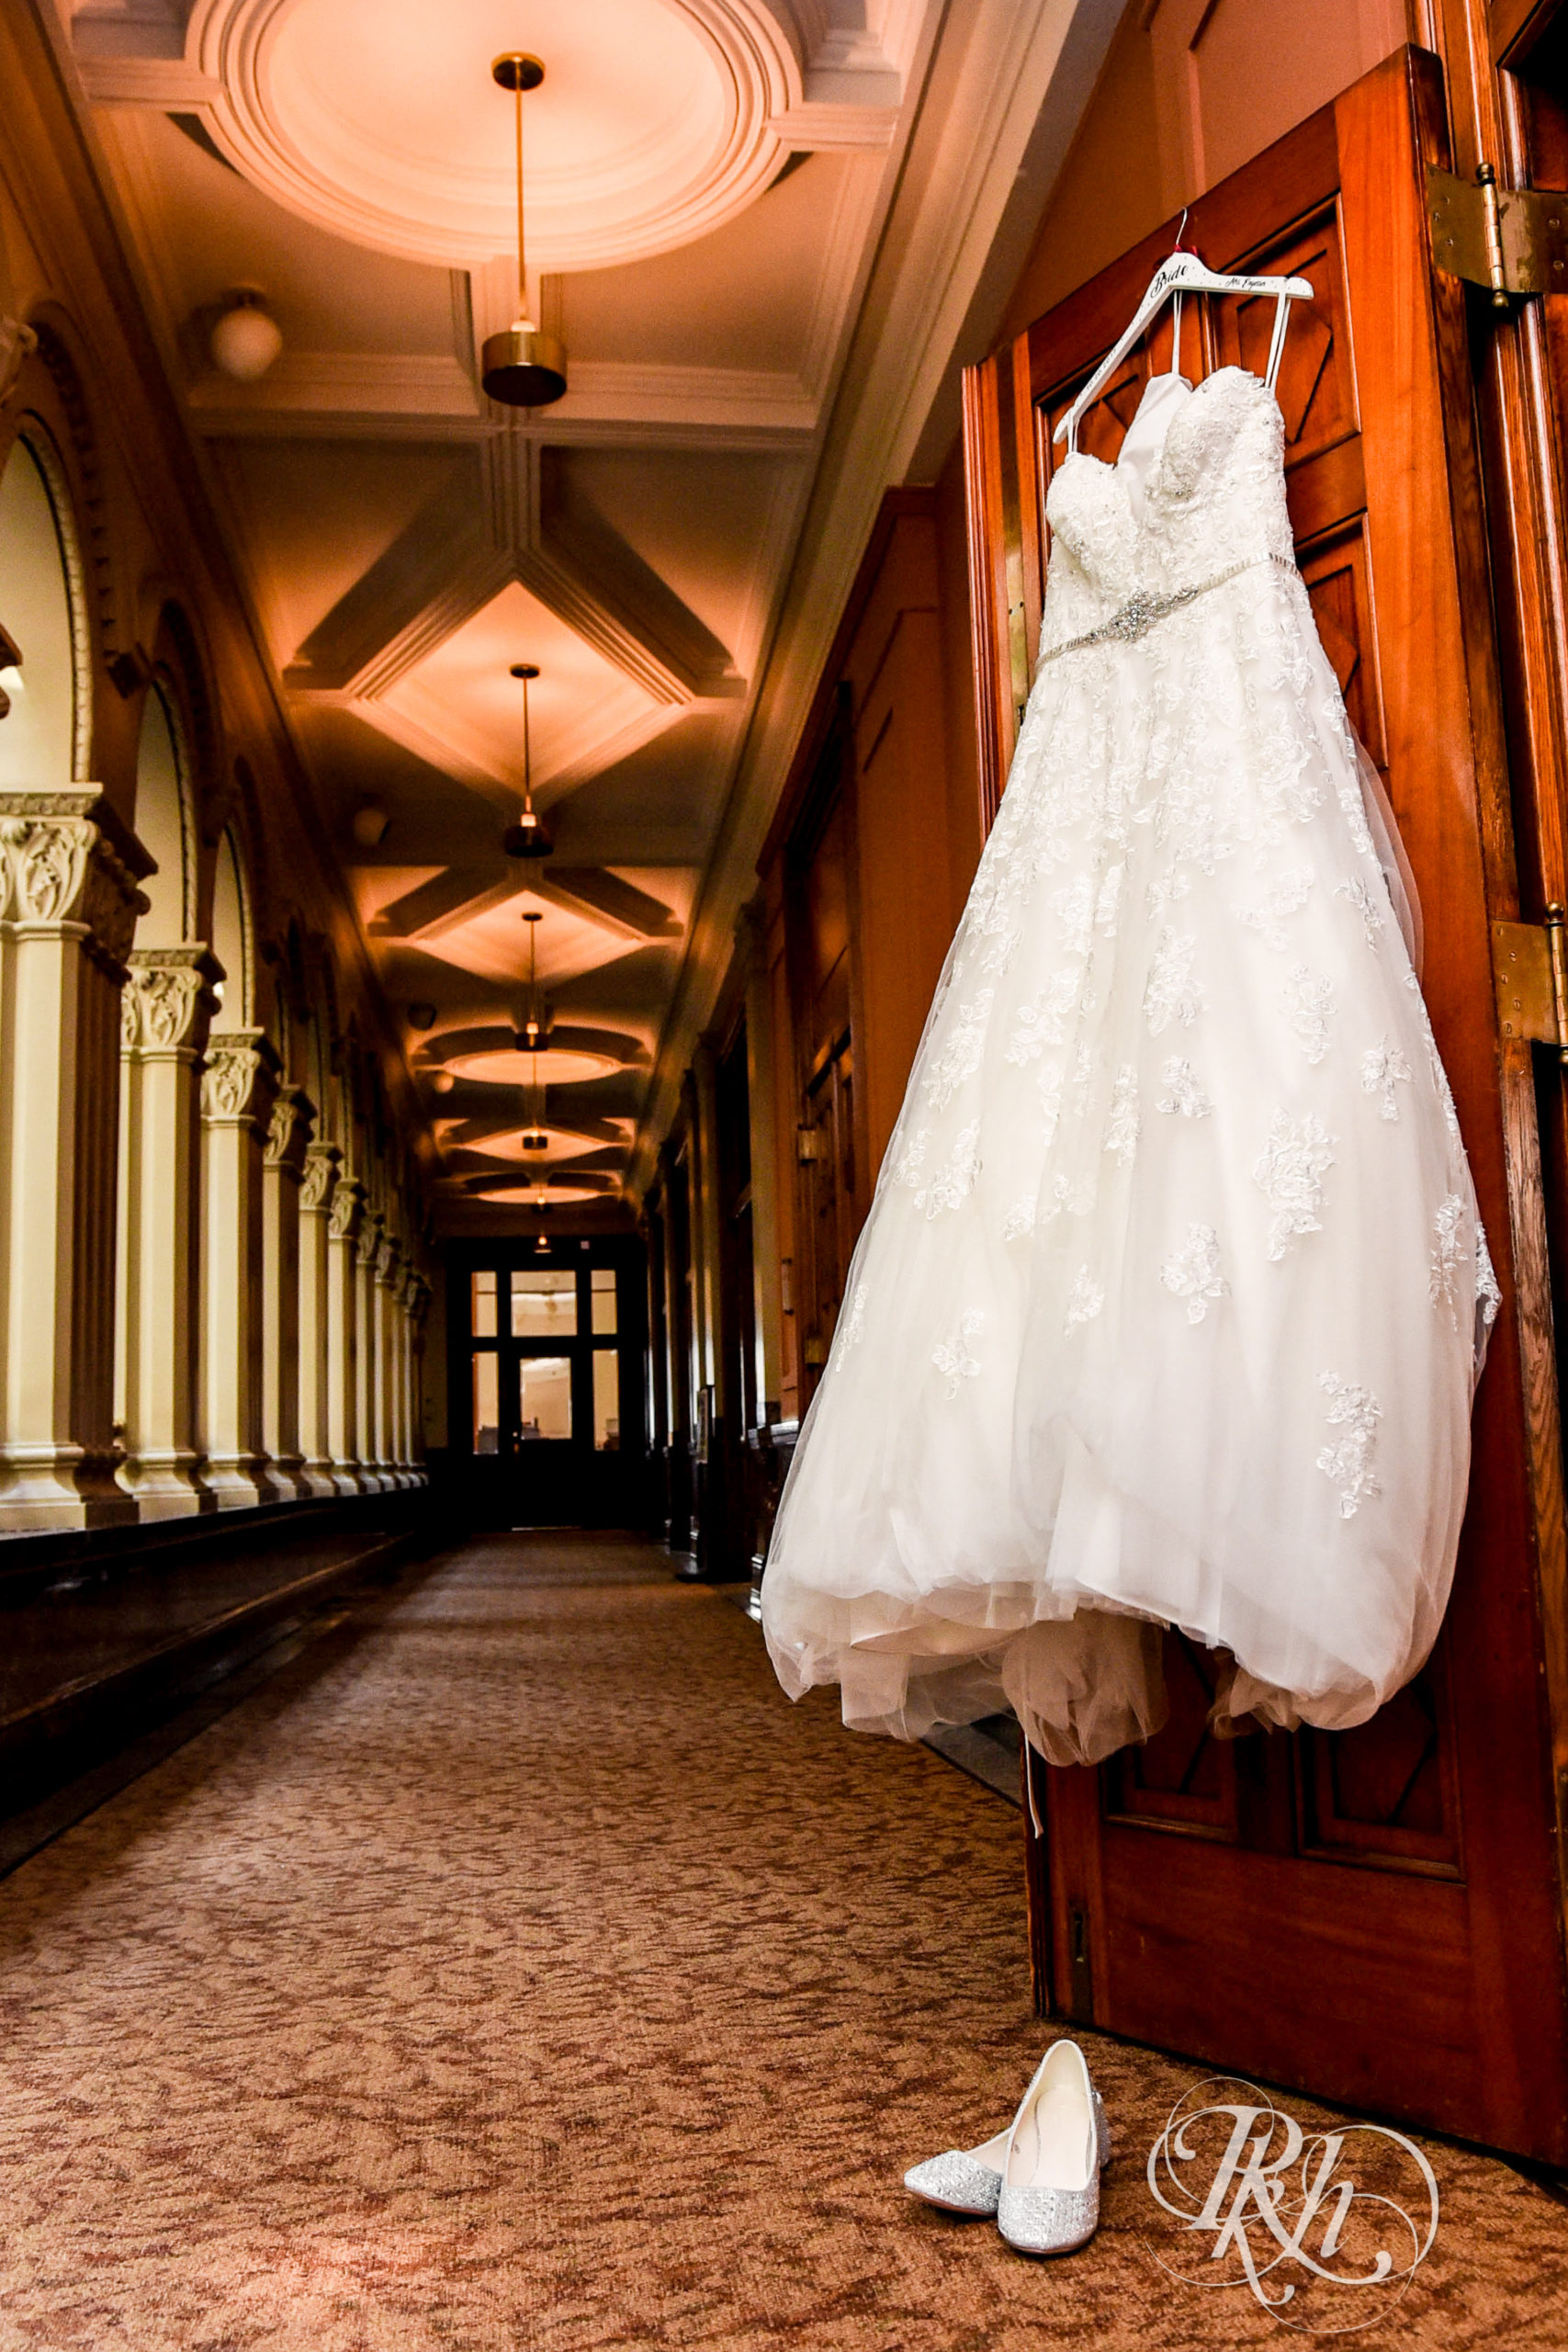 Wedding dress hanging on door at Landmark Center in Saint Paul, Minnesota.